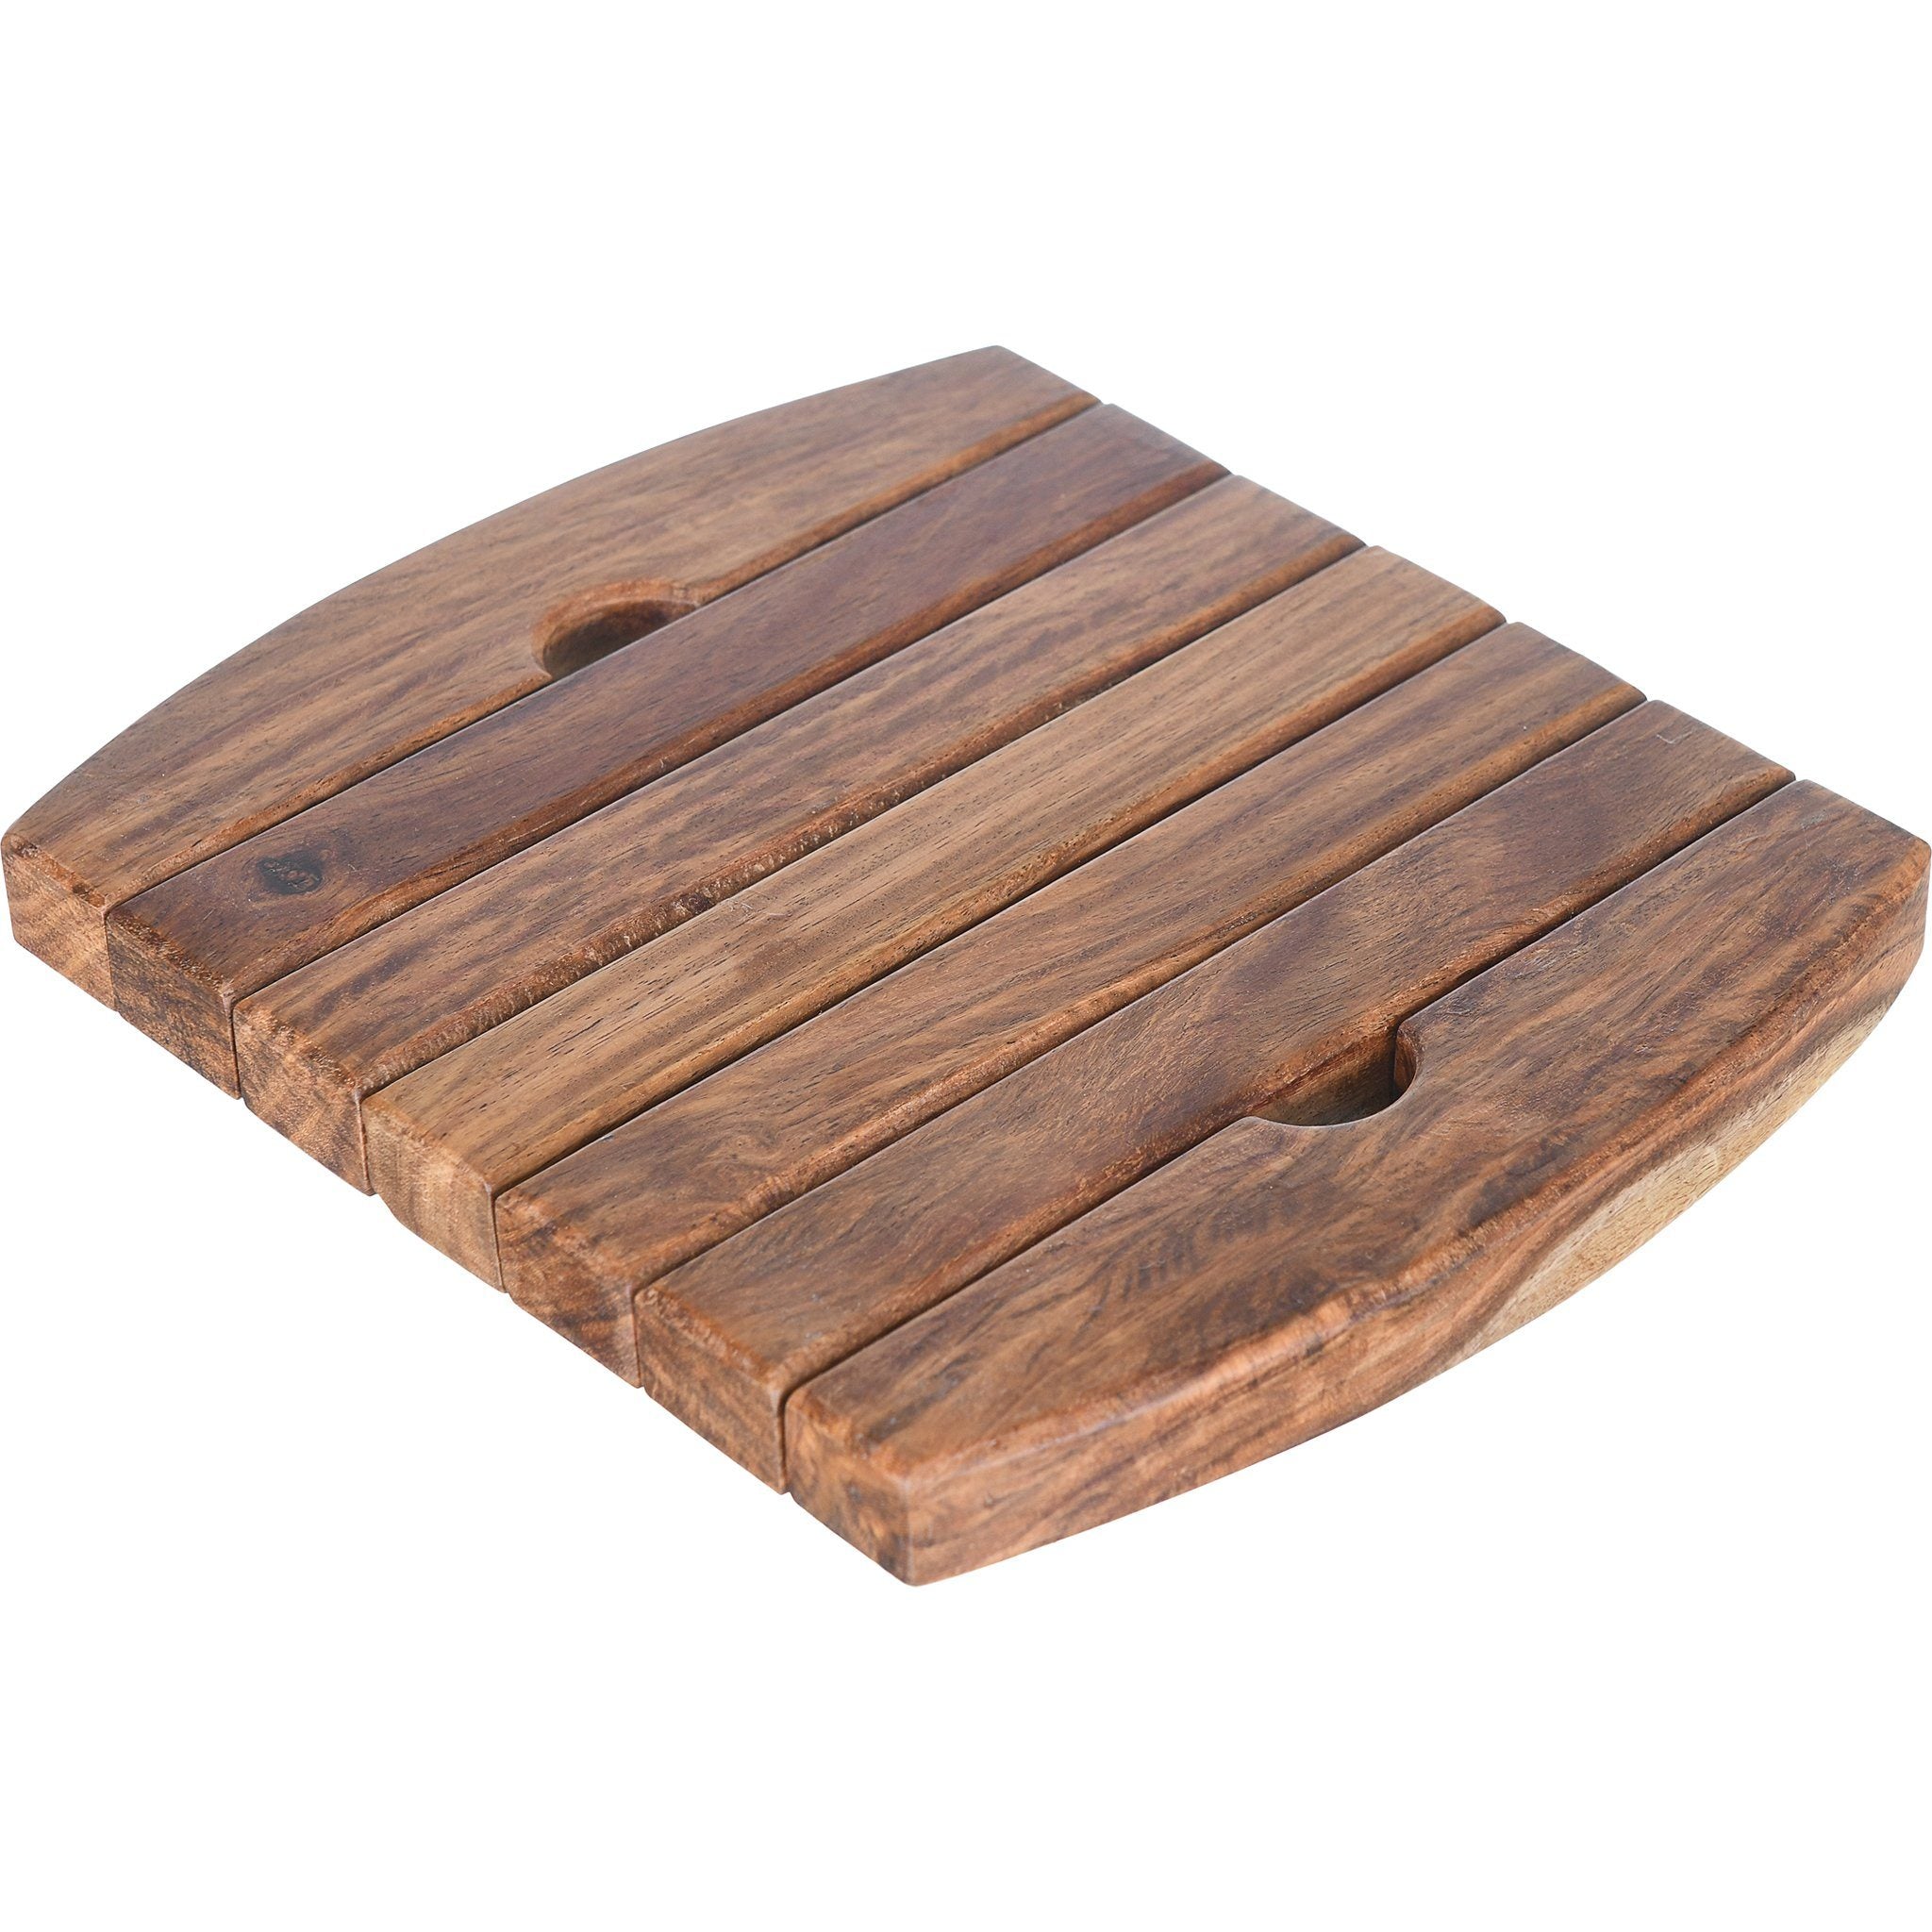 Wooden Trivet - 21x17.5cm - 5900018